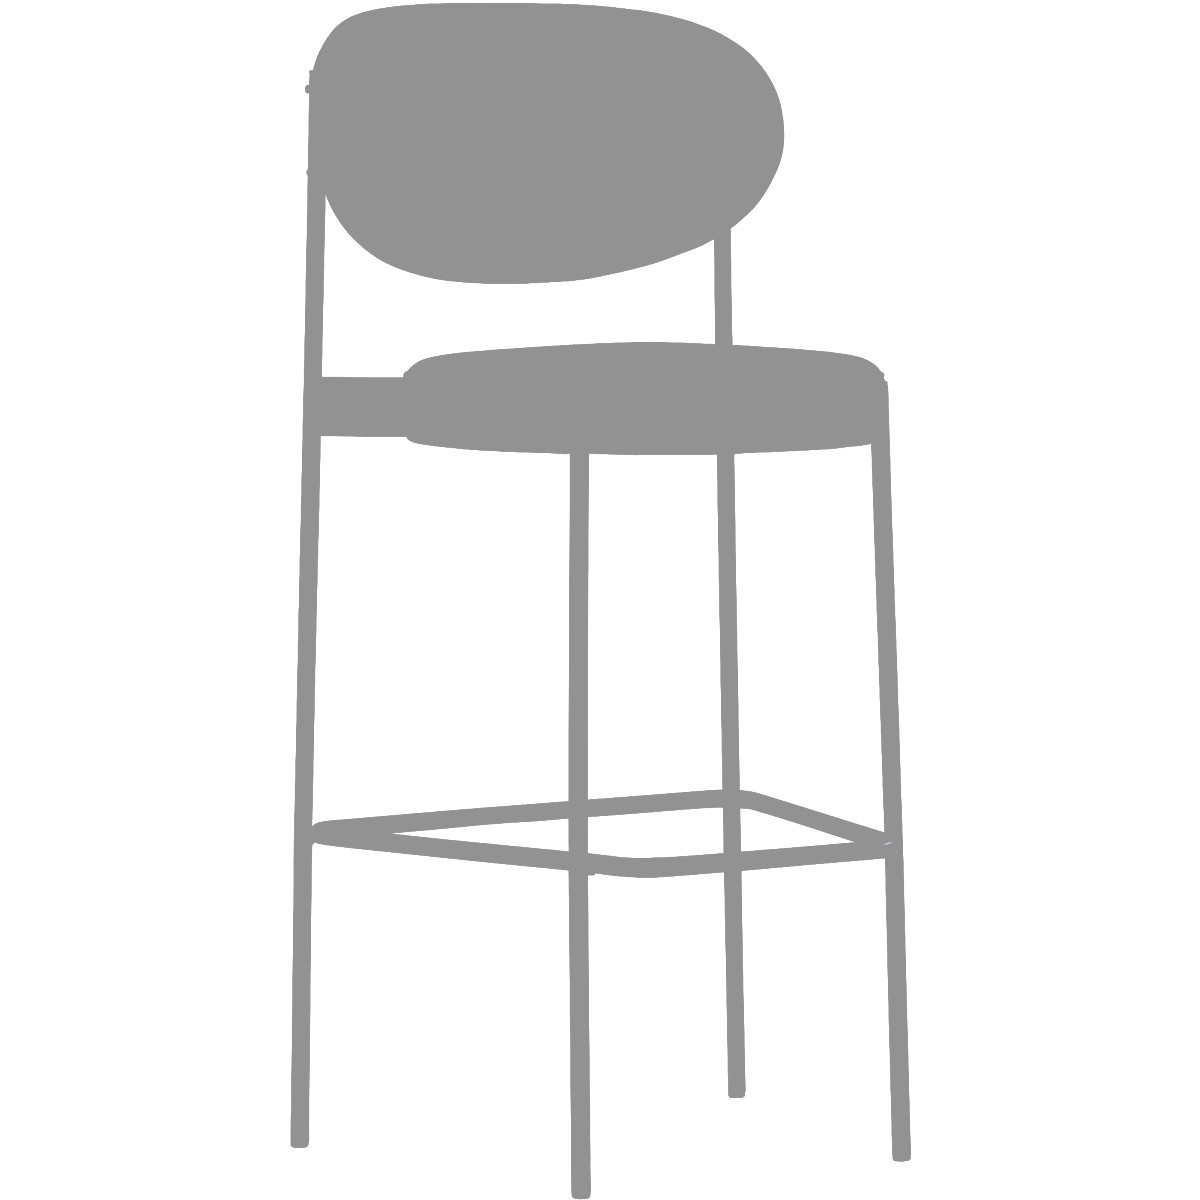 Series 430 bar stool